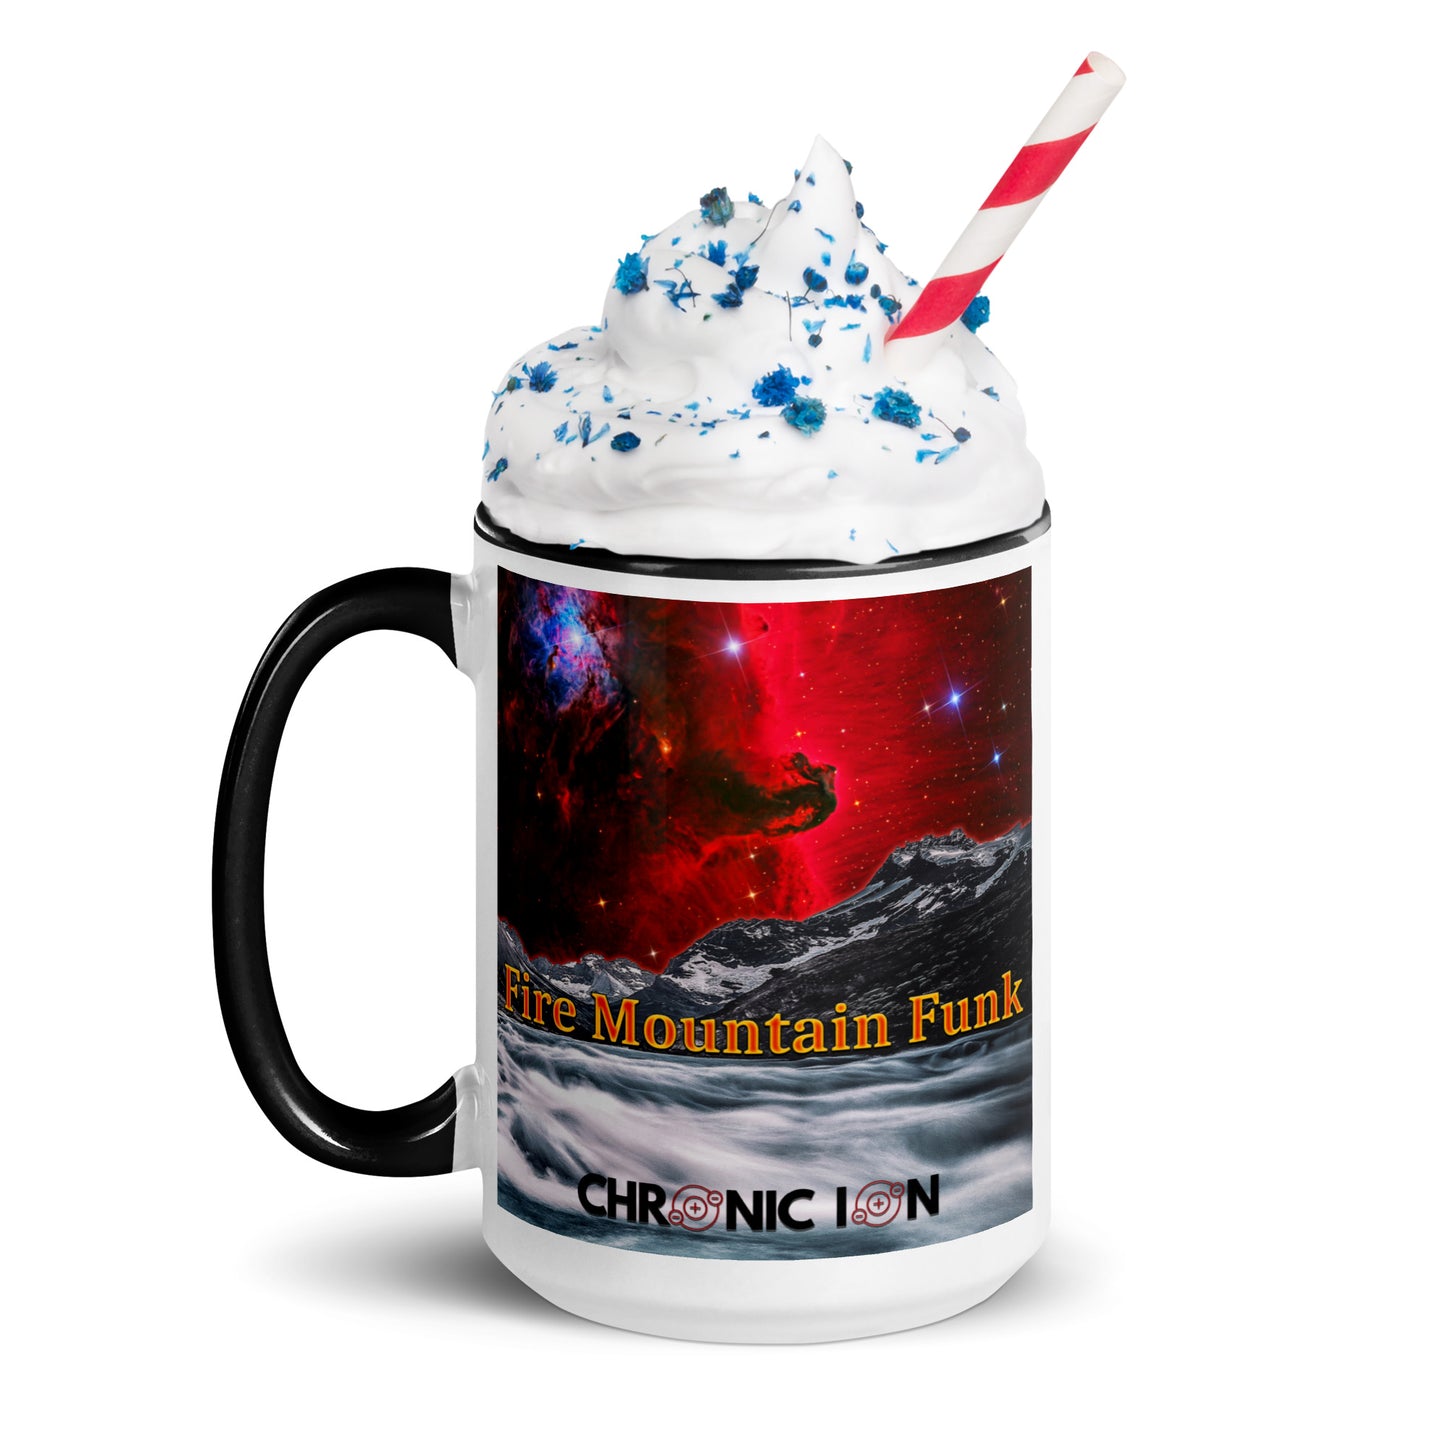 Chronic Ion - Fire Mountain Funk Mug With Color Inside